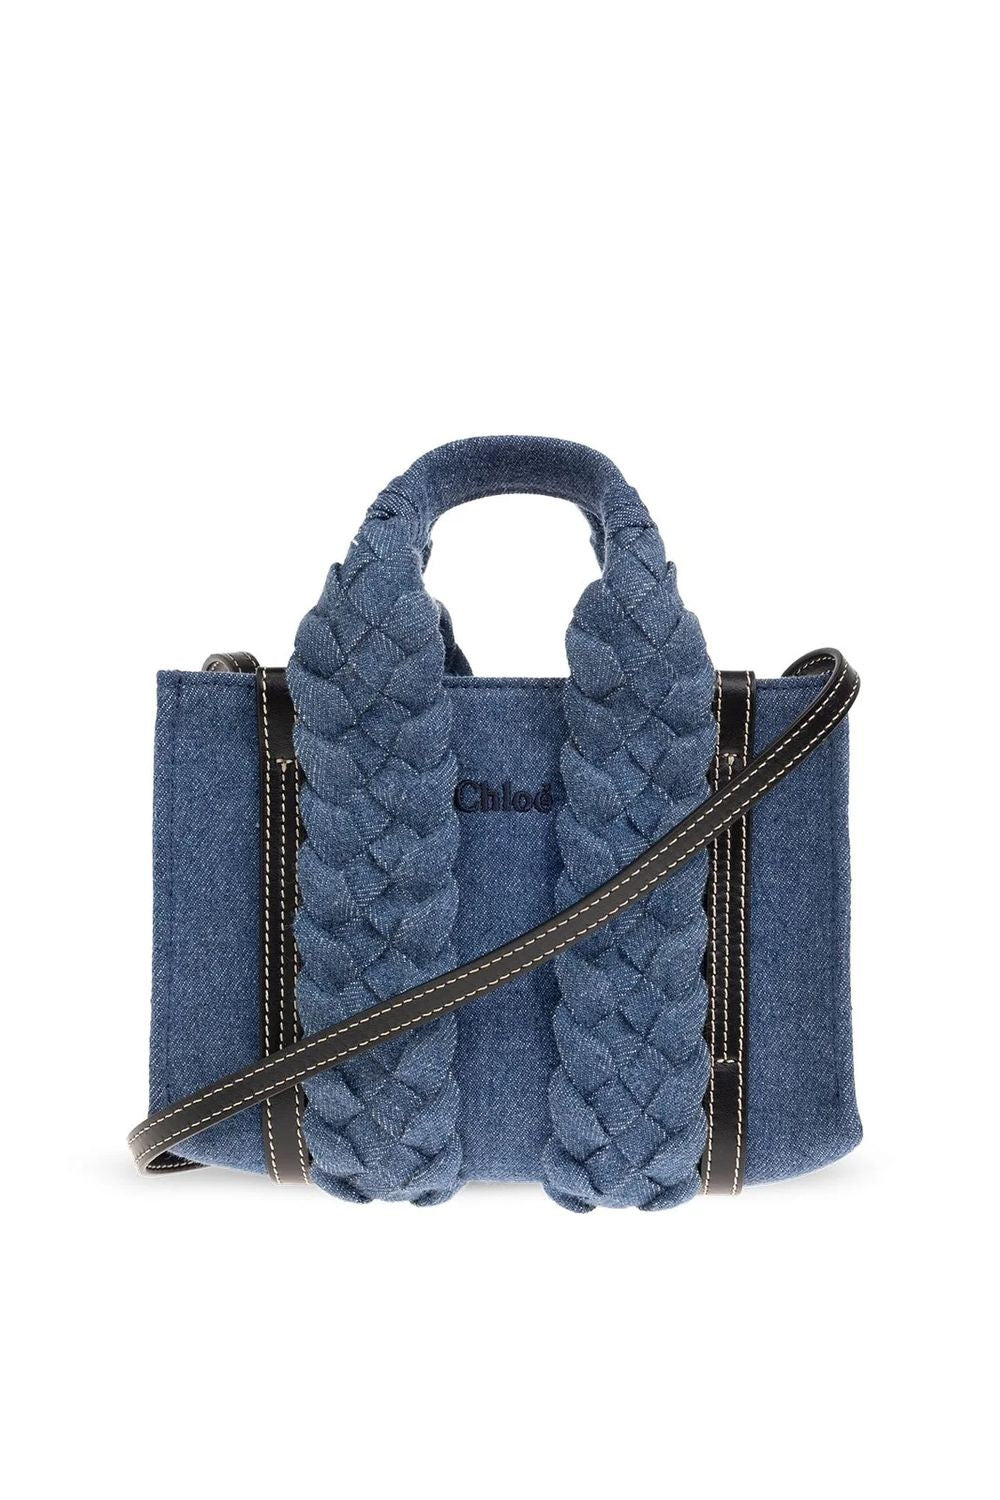 CHLOÉ Navy Blue Cotton Mini Handbag for Women